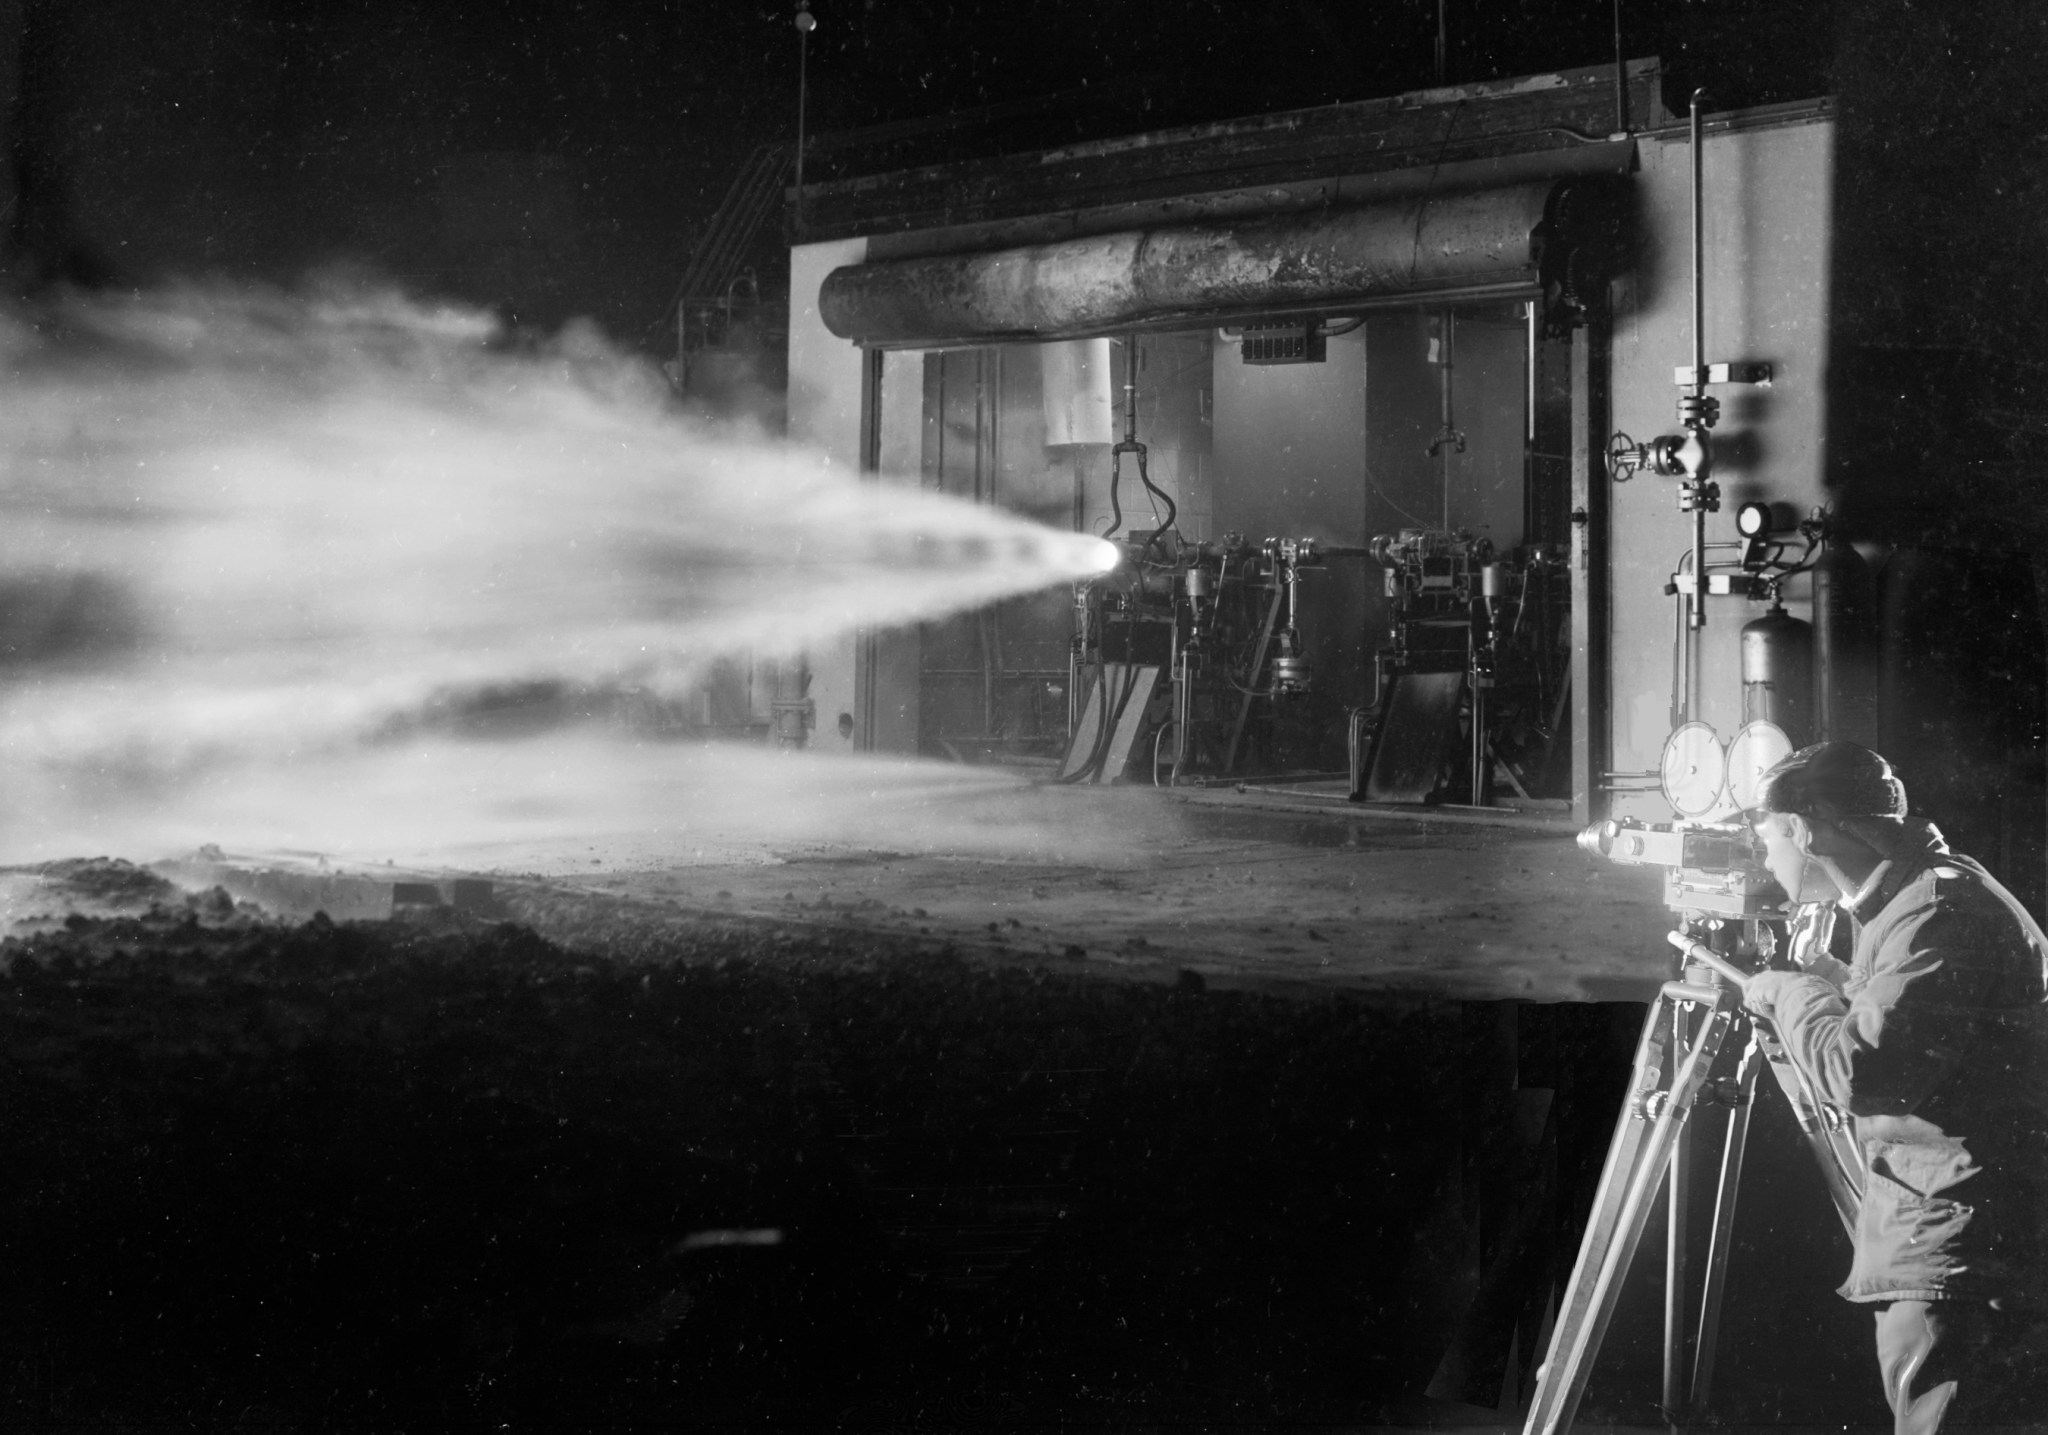 Photographer films engine firing at night.